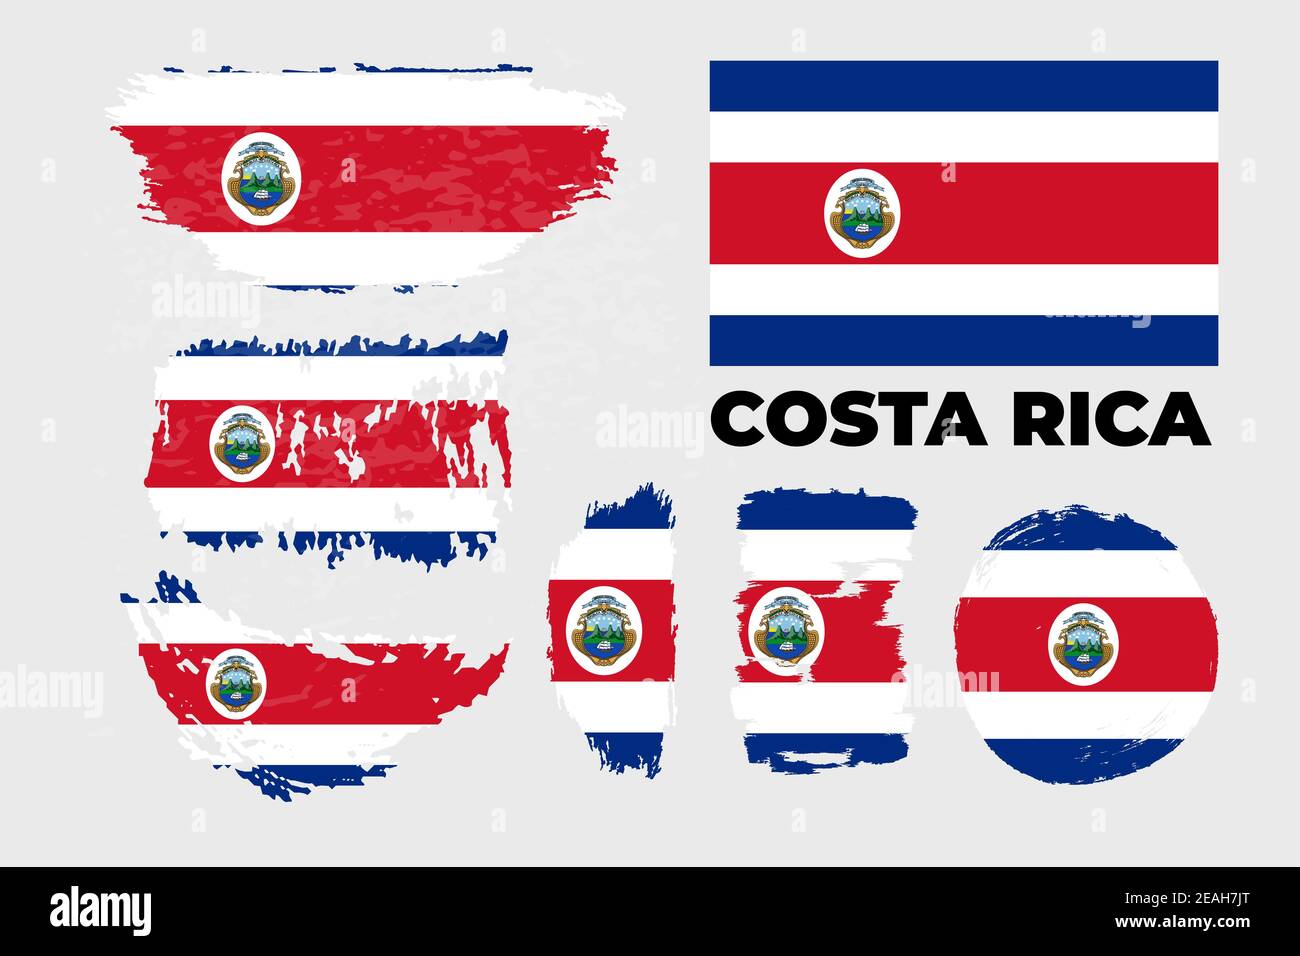 Costa Rica Flagge. Offizielle Farben und Proportionen korrekt. Stock Vektor